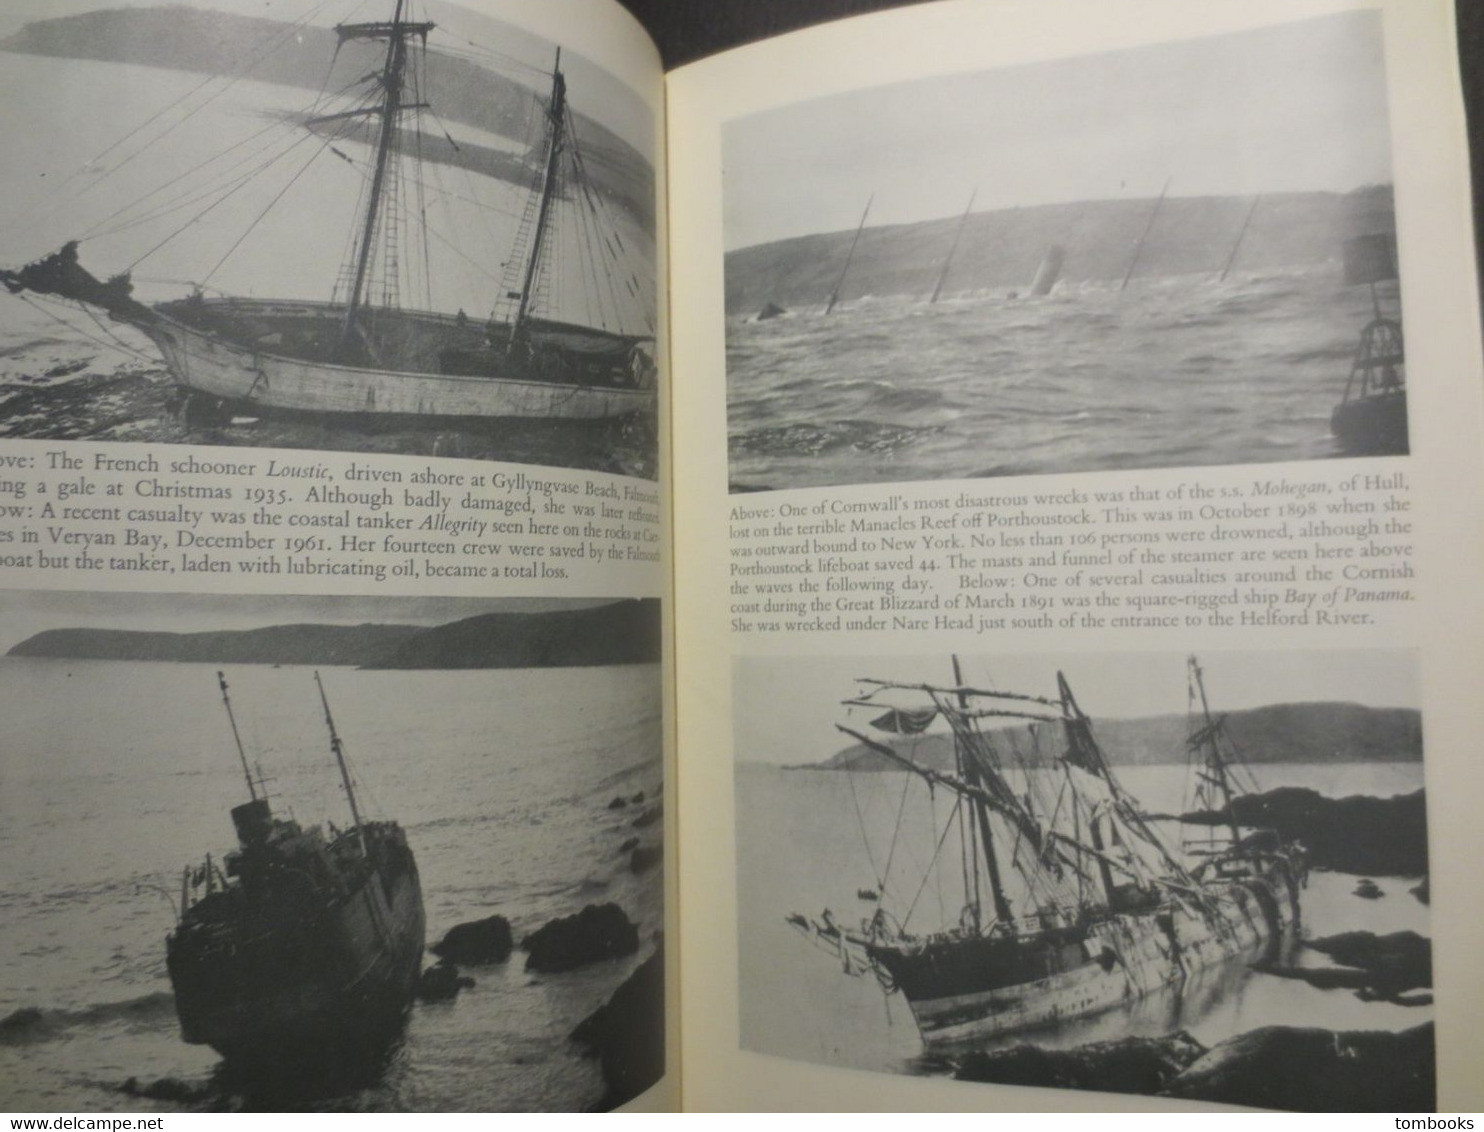 Epaves De Navires En Cornouailles Illustré - Cornish Ship Wrecks Illutrated - Cyril Noall And Grahame Farr - - Verkehr